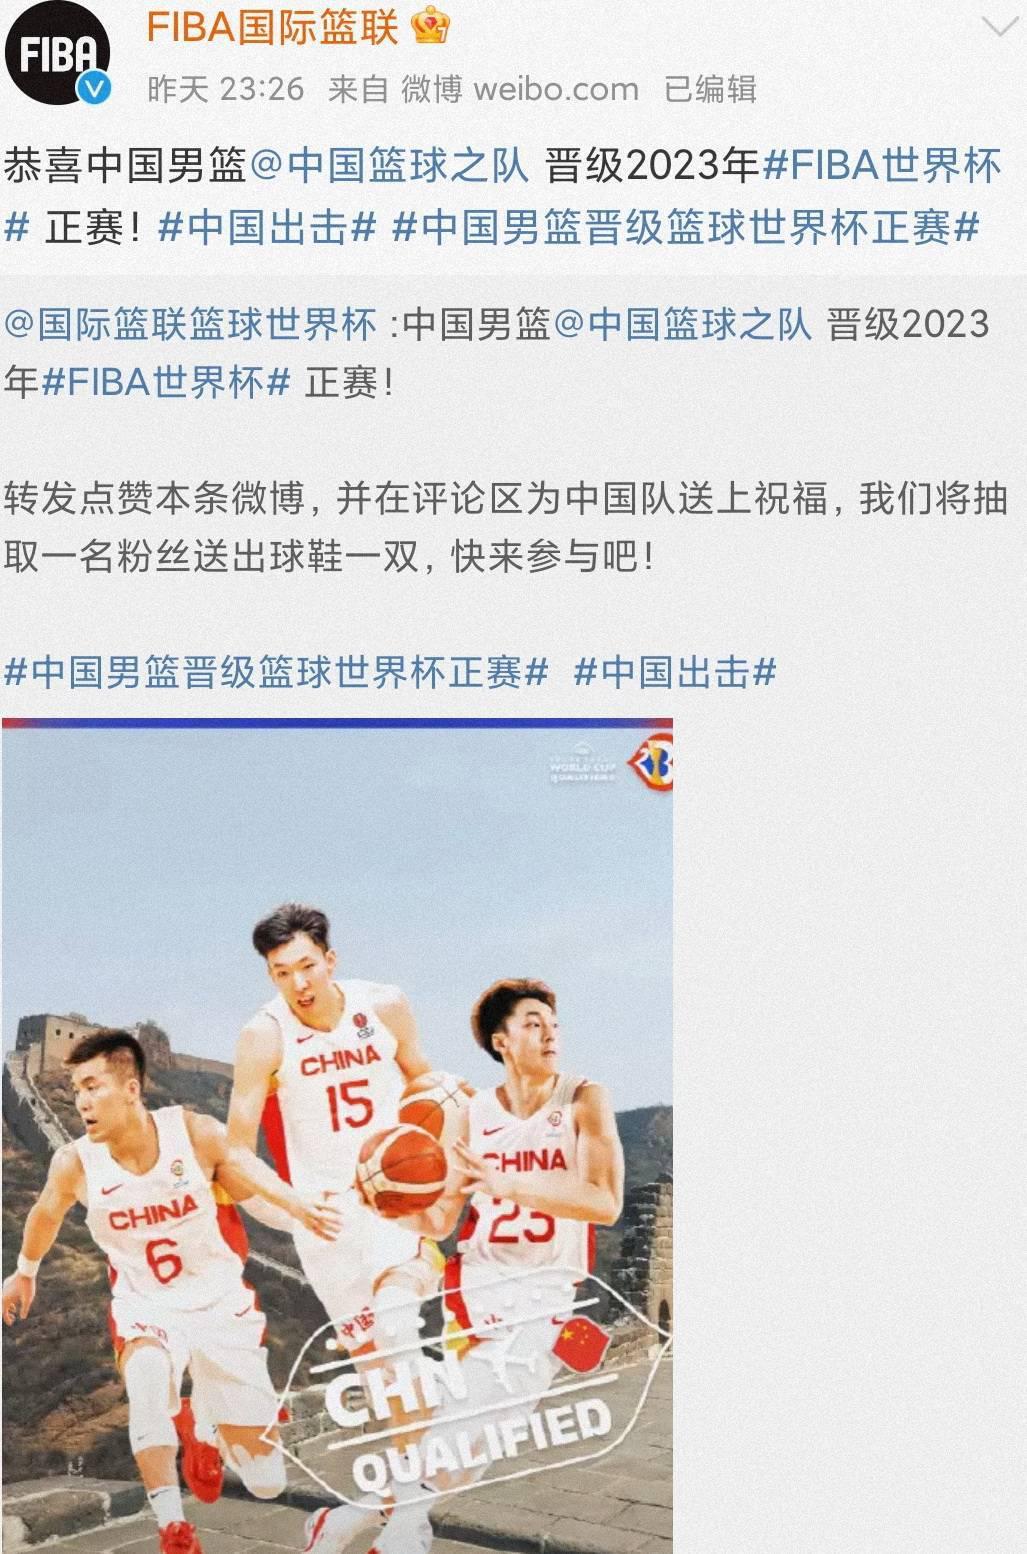 FIBA世界杯官媒贺中国男篮出线配图被指搞事情，不仅是球员和号码(1)